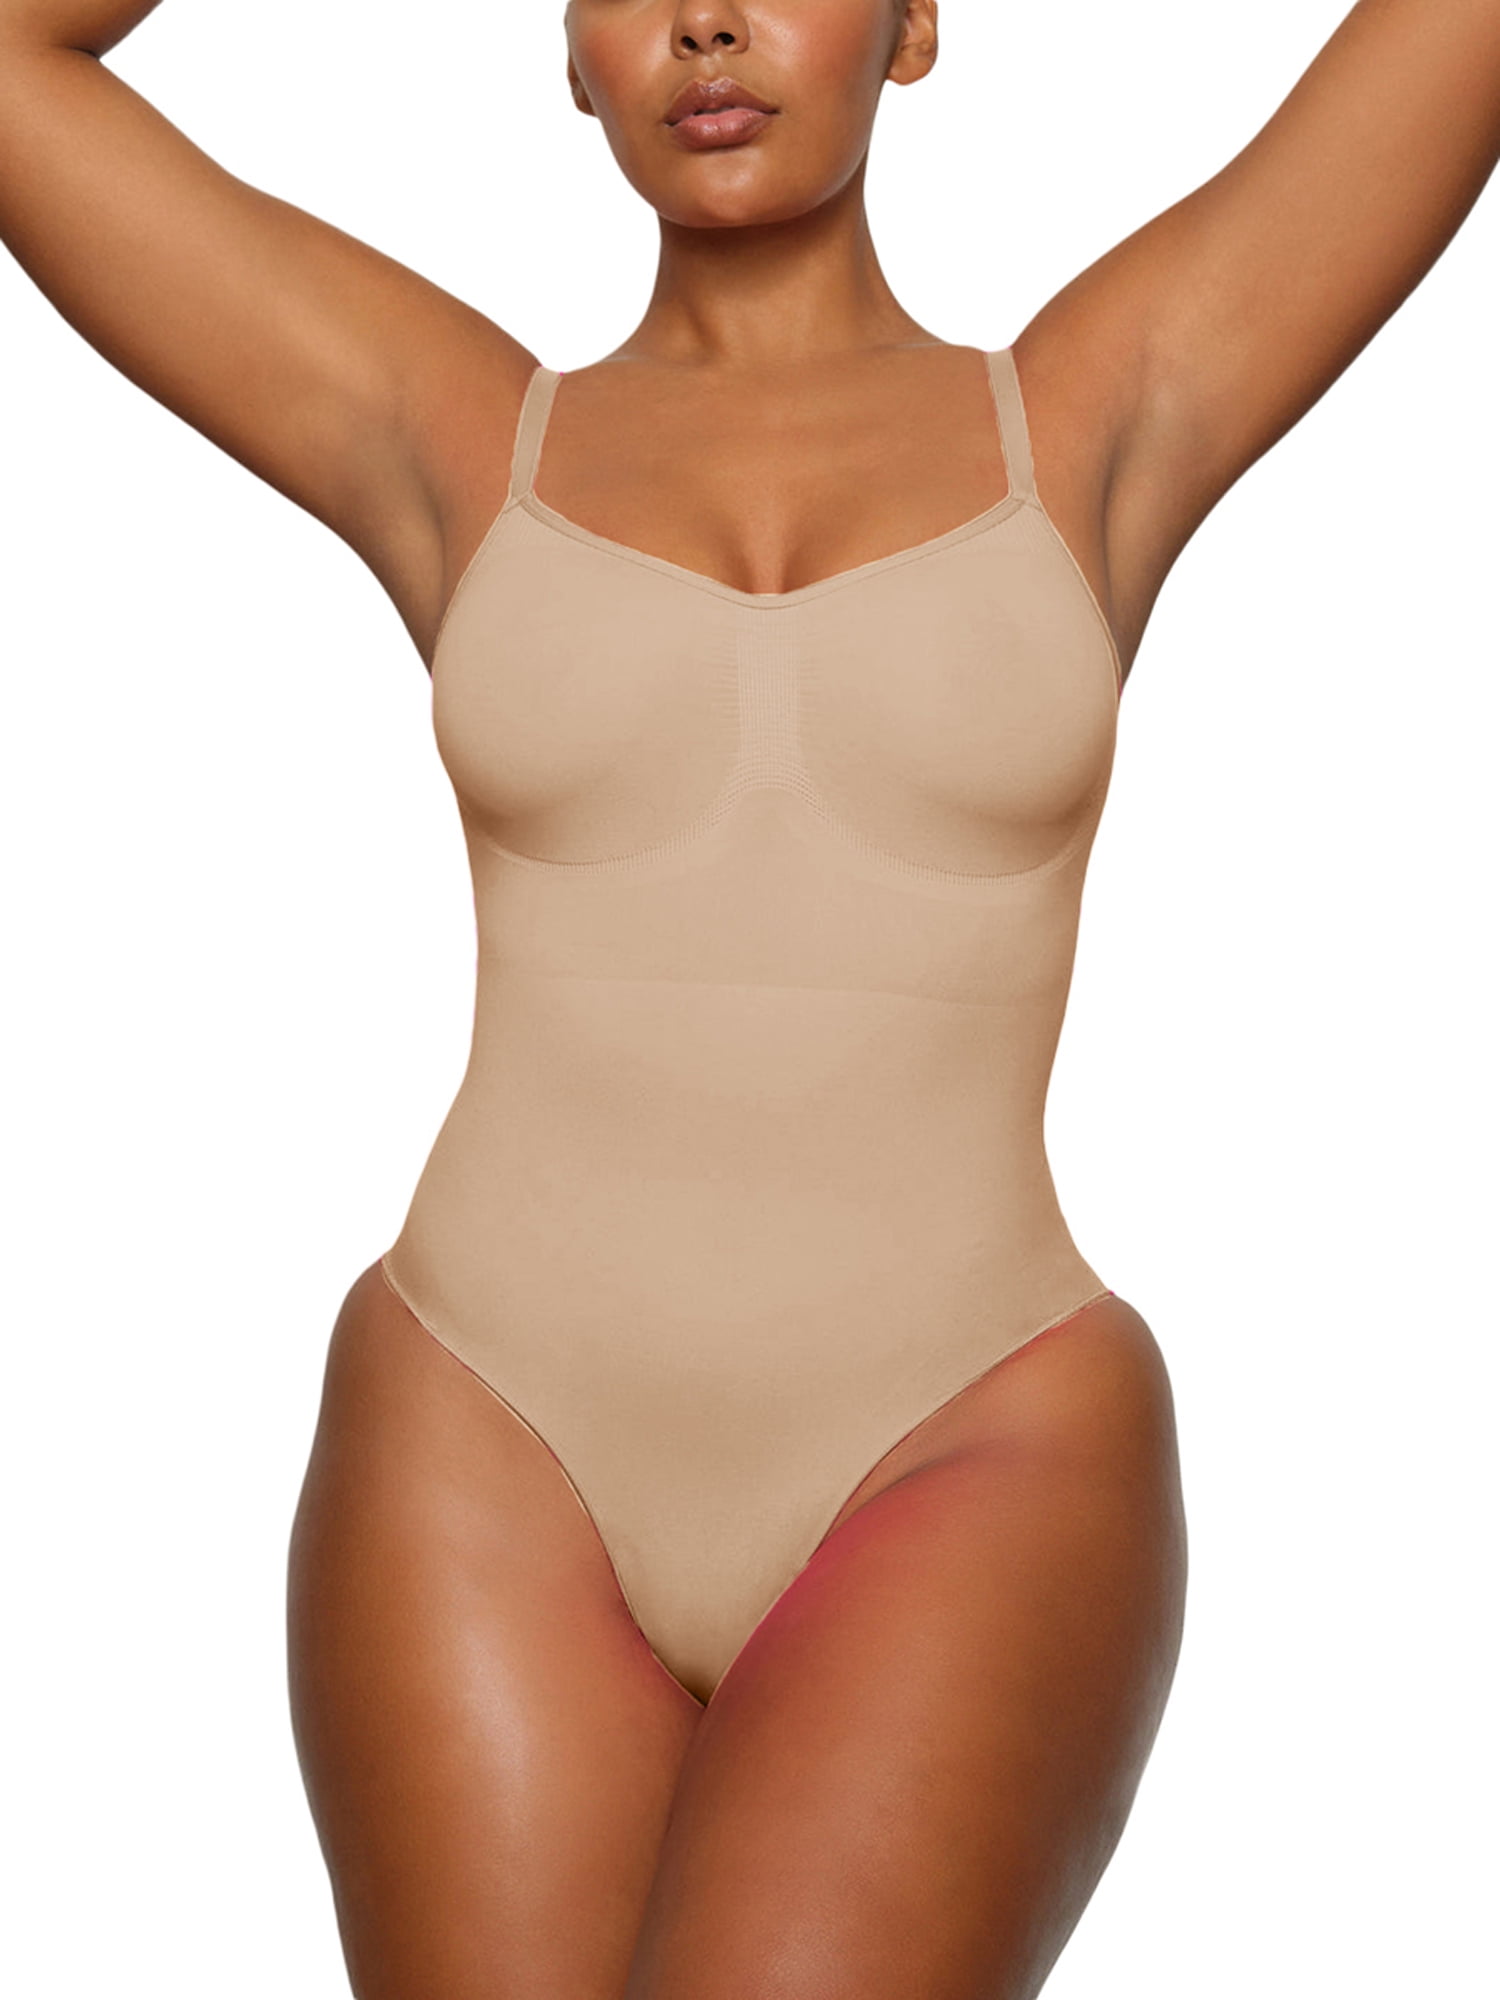 Peyakidsaa Women's Cami Bodysuit Tummy Control Shapewear Seamless